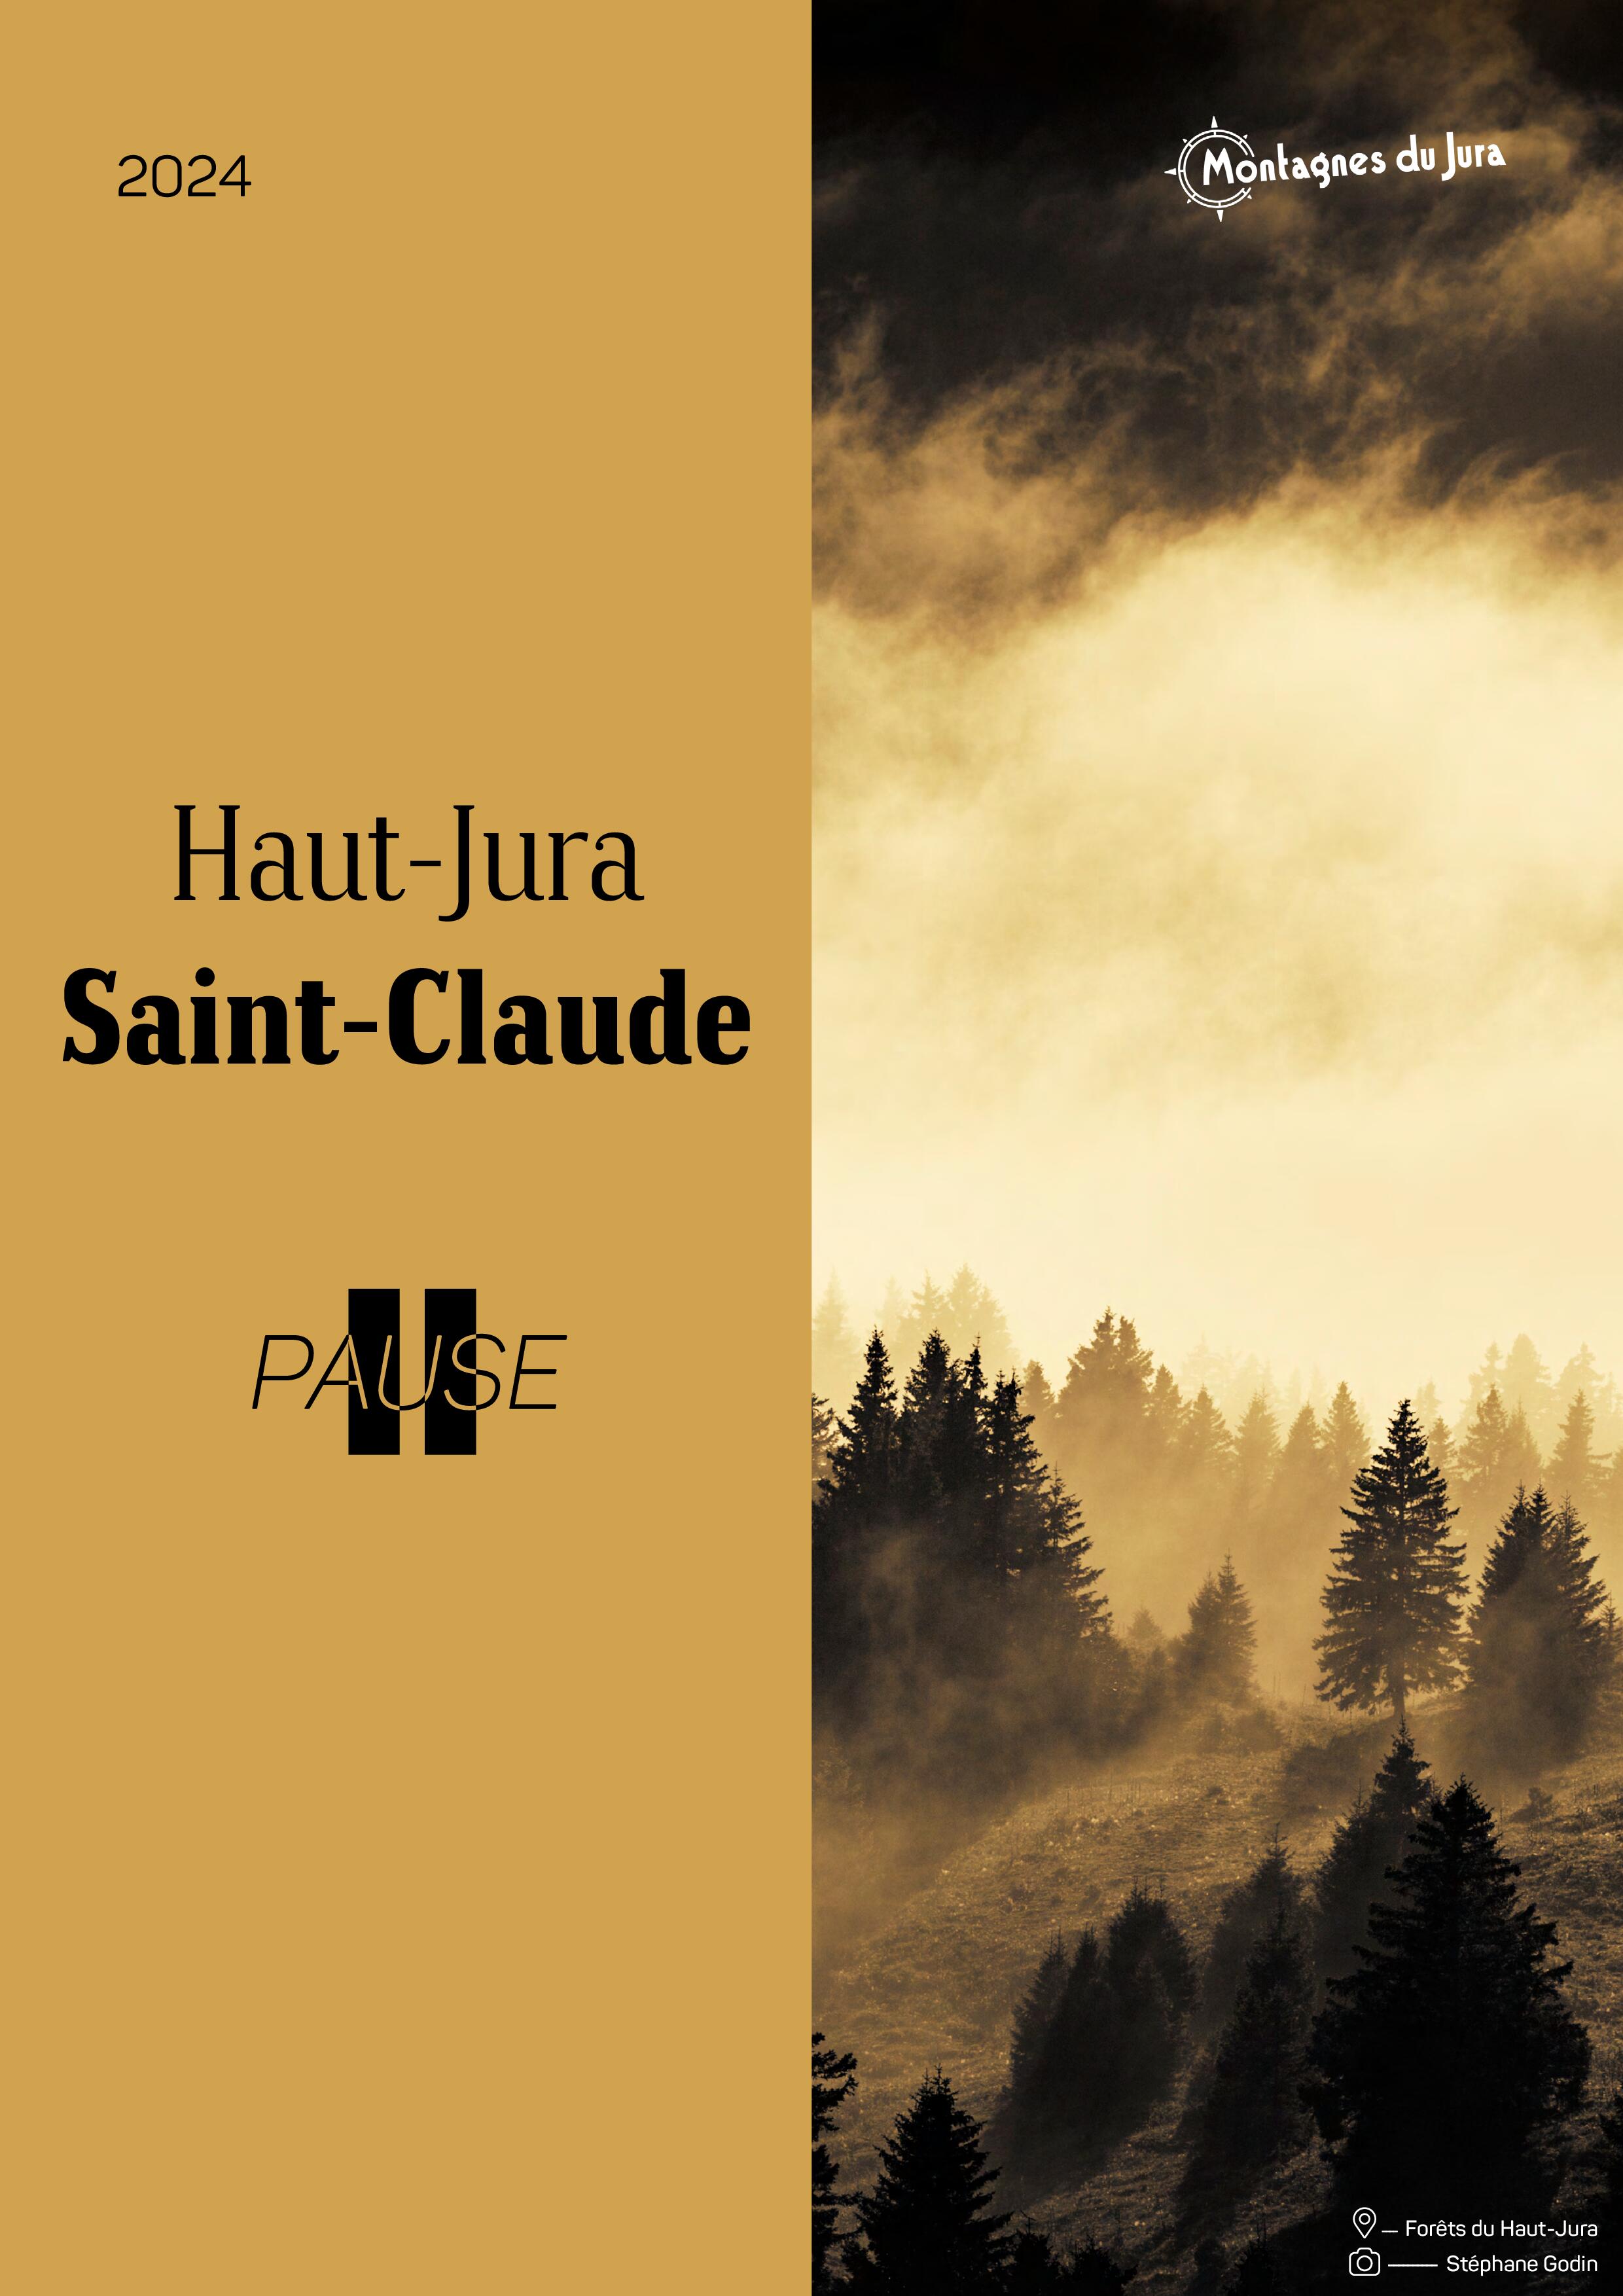 Magazine Touristique Haut-Jura Saint-Claude 2024 